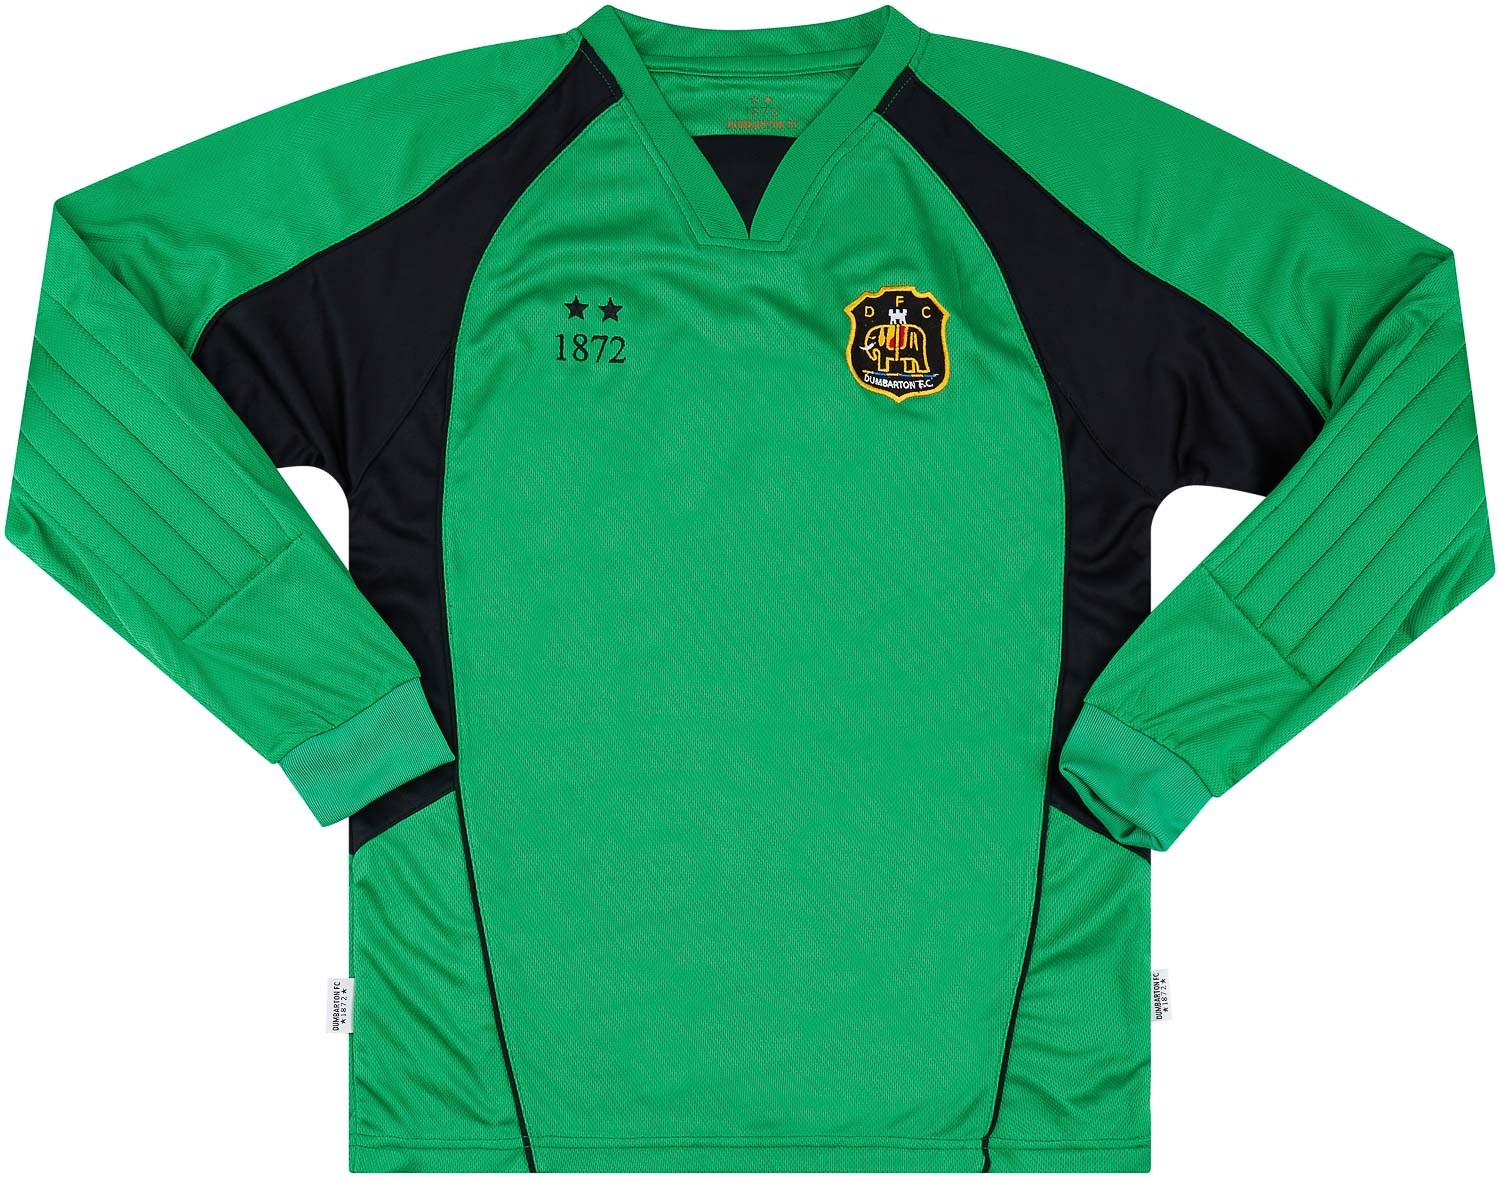 Dumbarton  Goalkeeper shirt (Original)